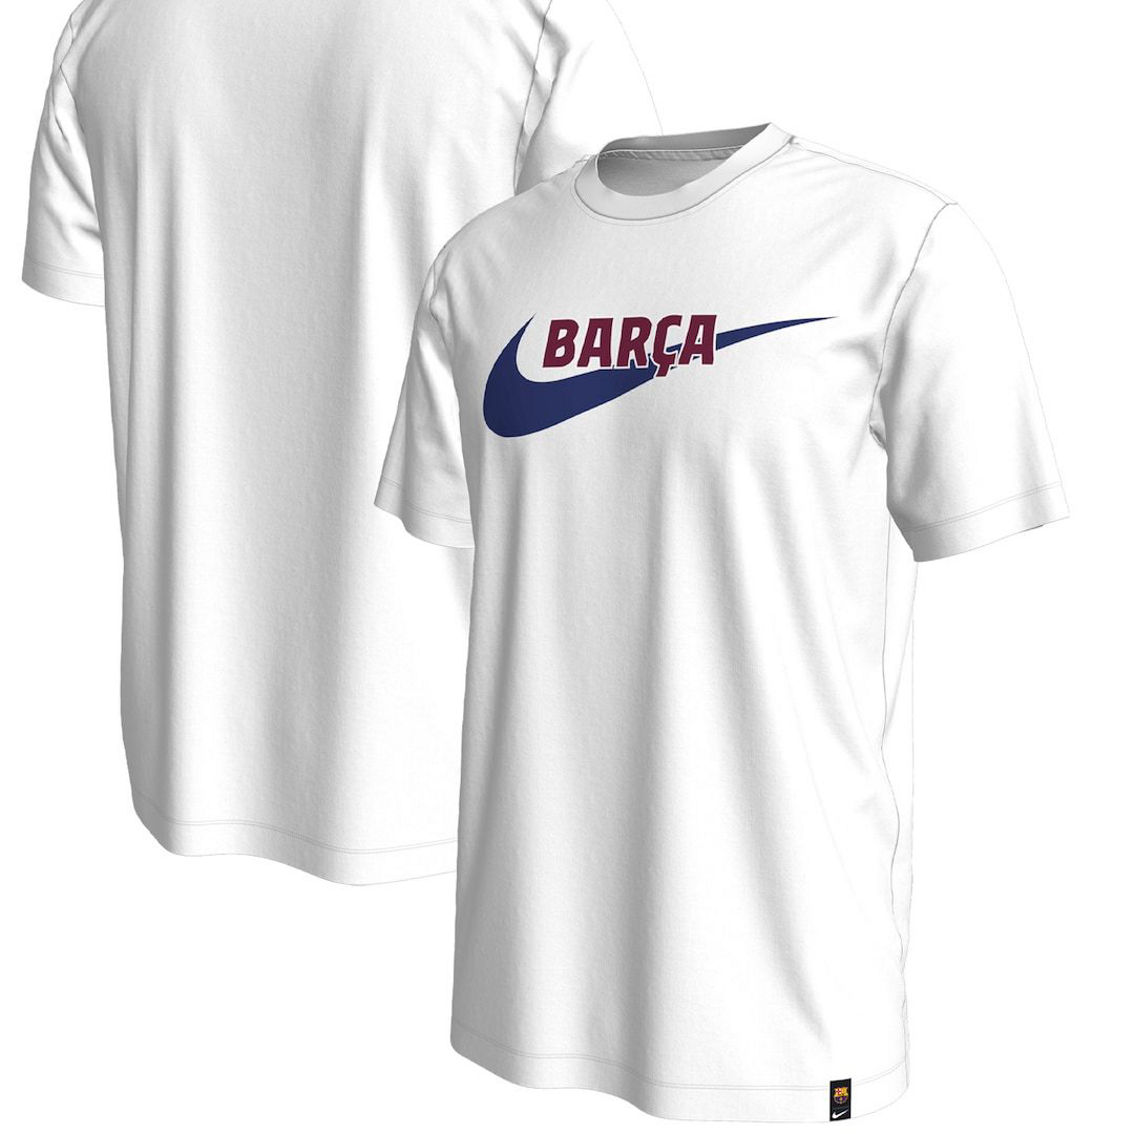 Nike Men's White Barcelona Swoosh T-Shirt - Image 2 of 4